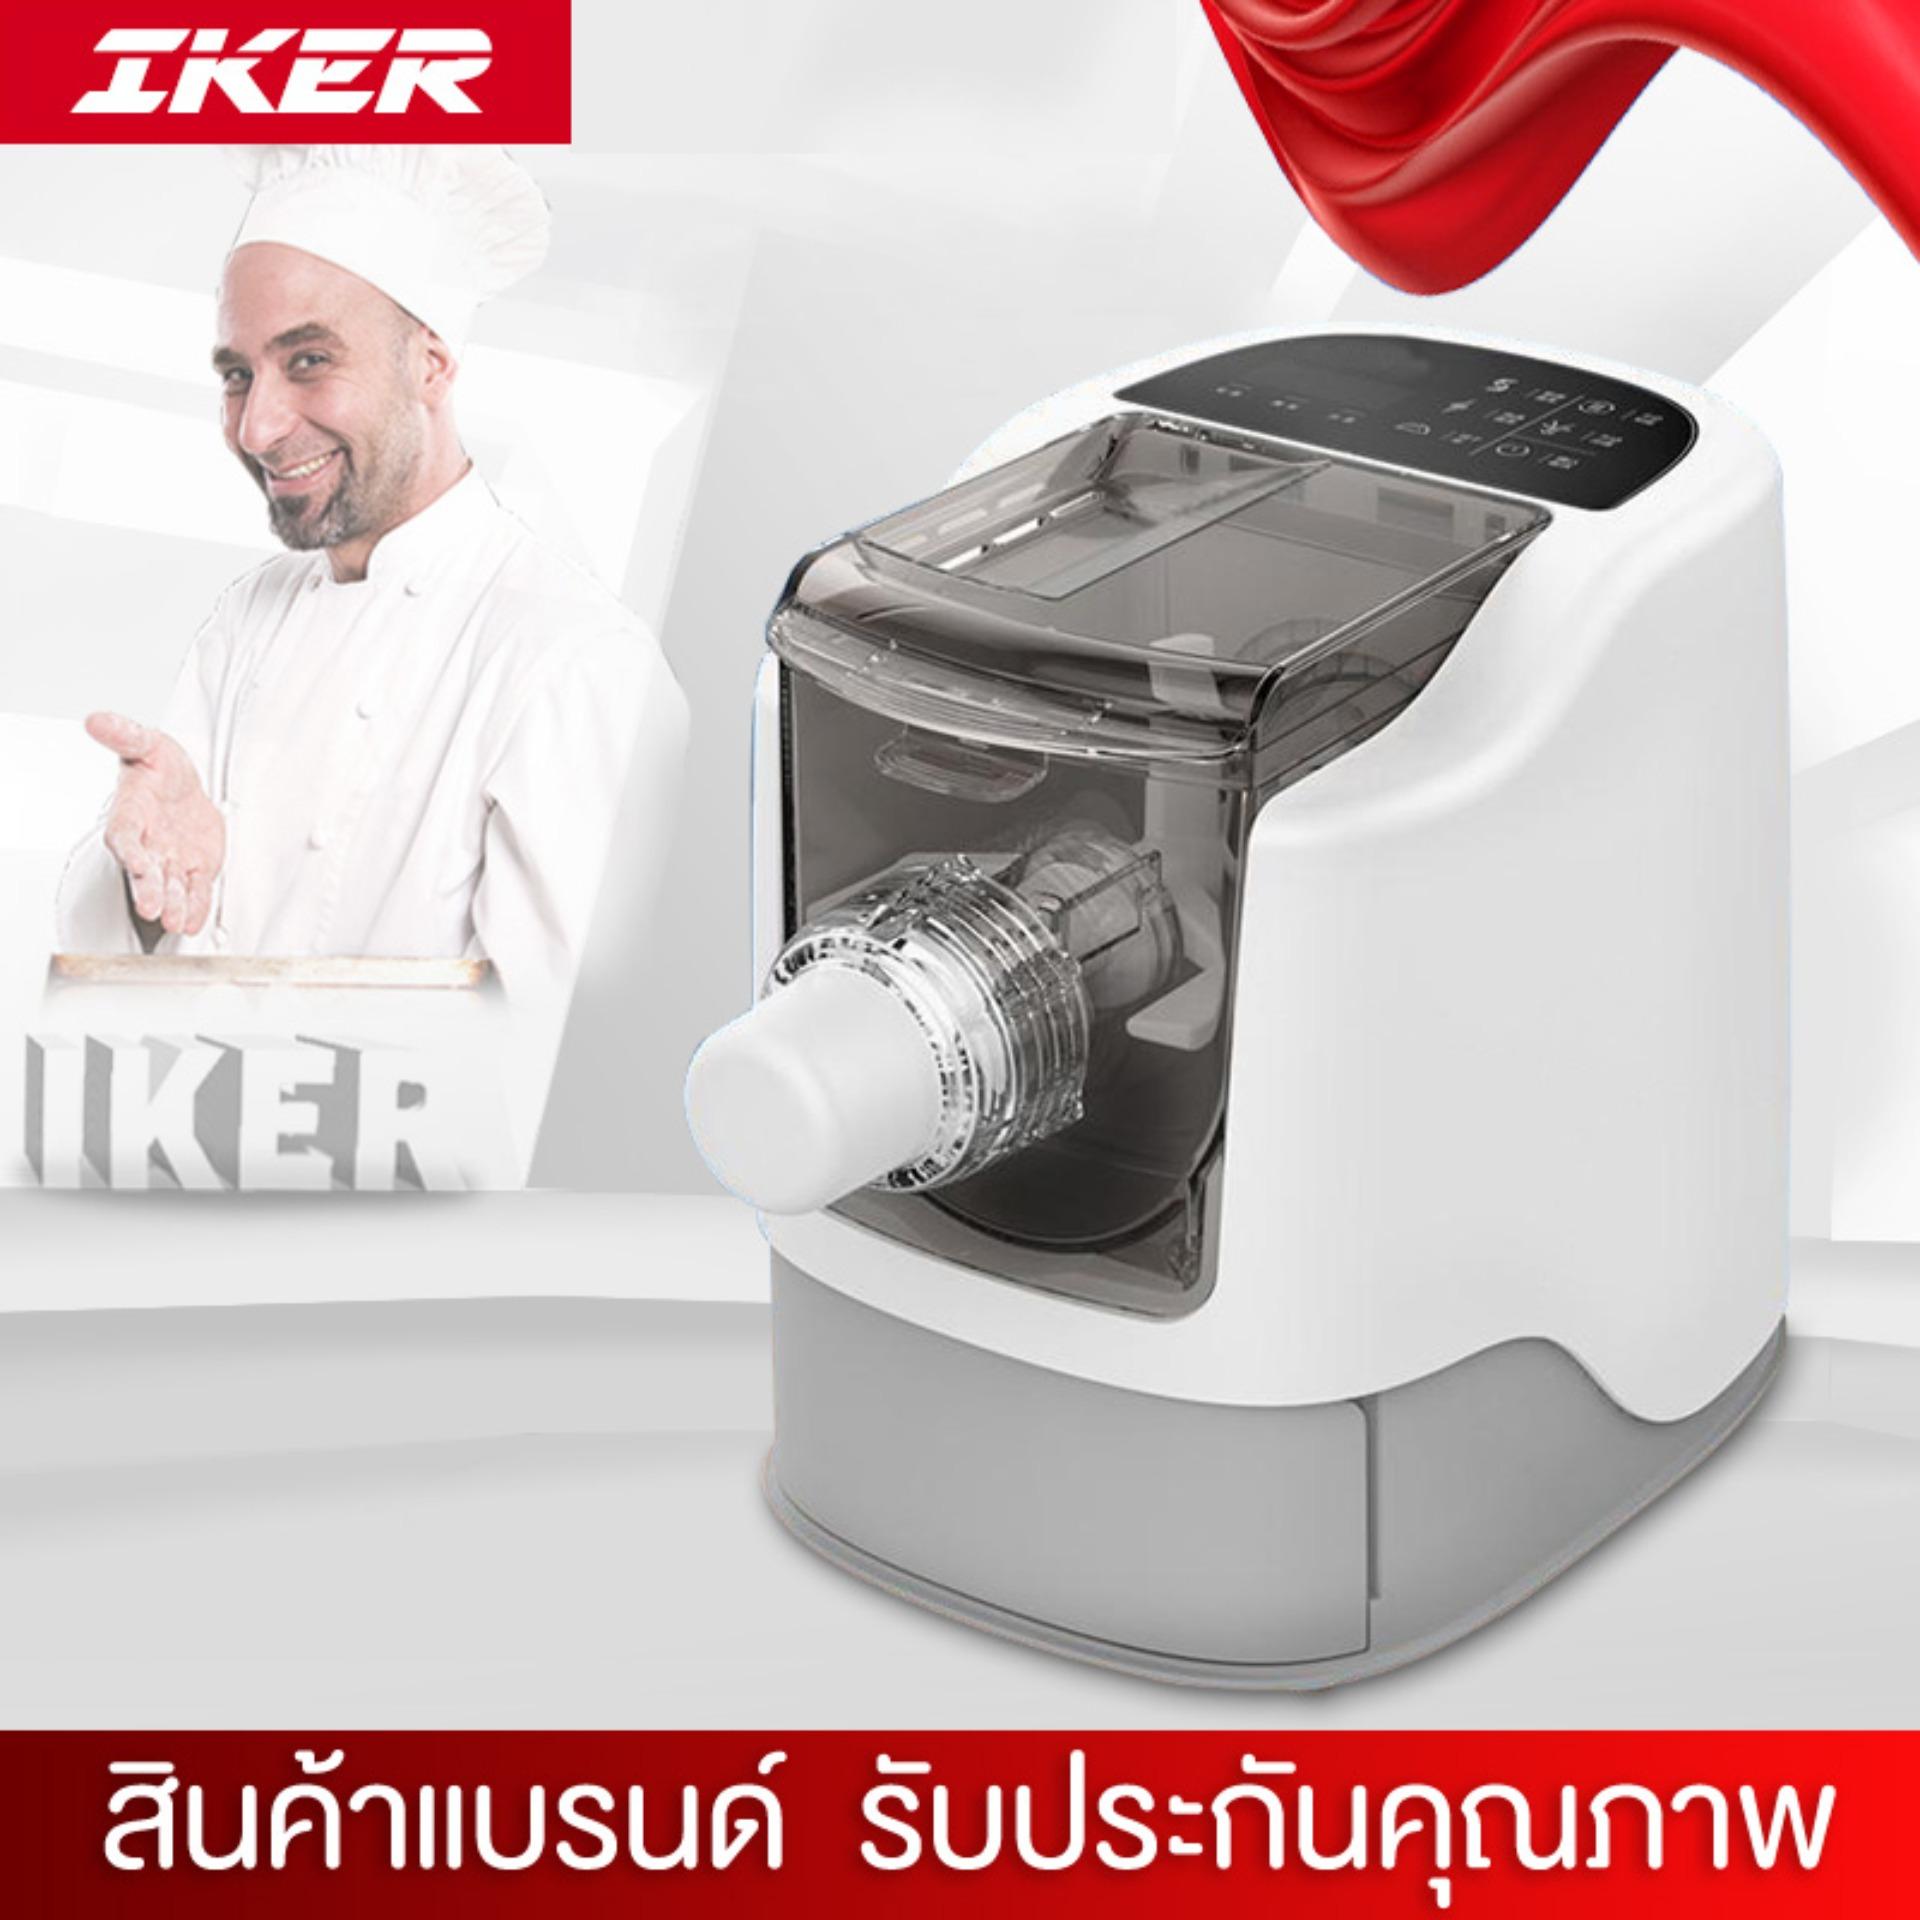 IKER เครื่องทำเส้นบะหมี่ เส้นพาสต้า (ระบบดิจิตอล) Noodles Maker For Home use